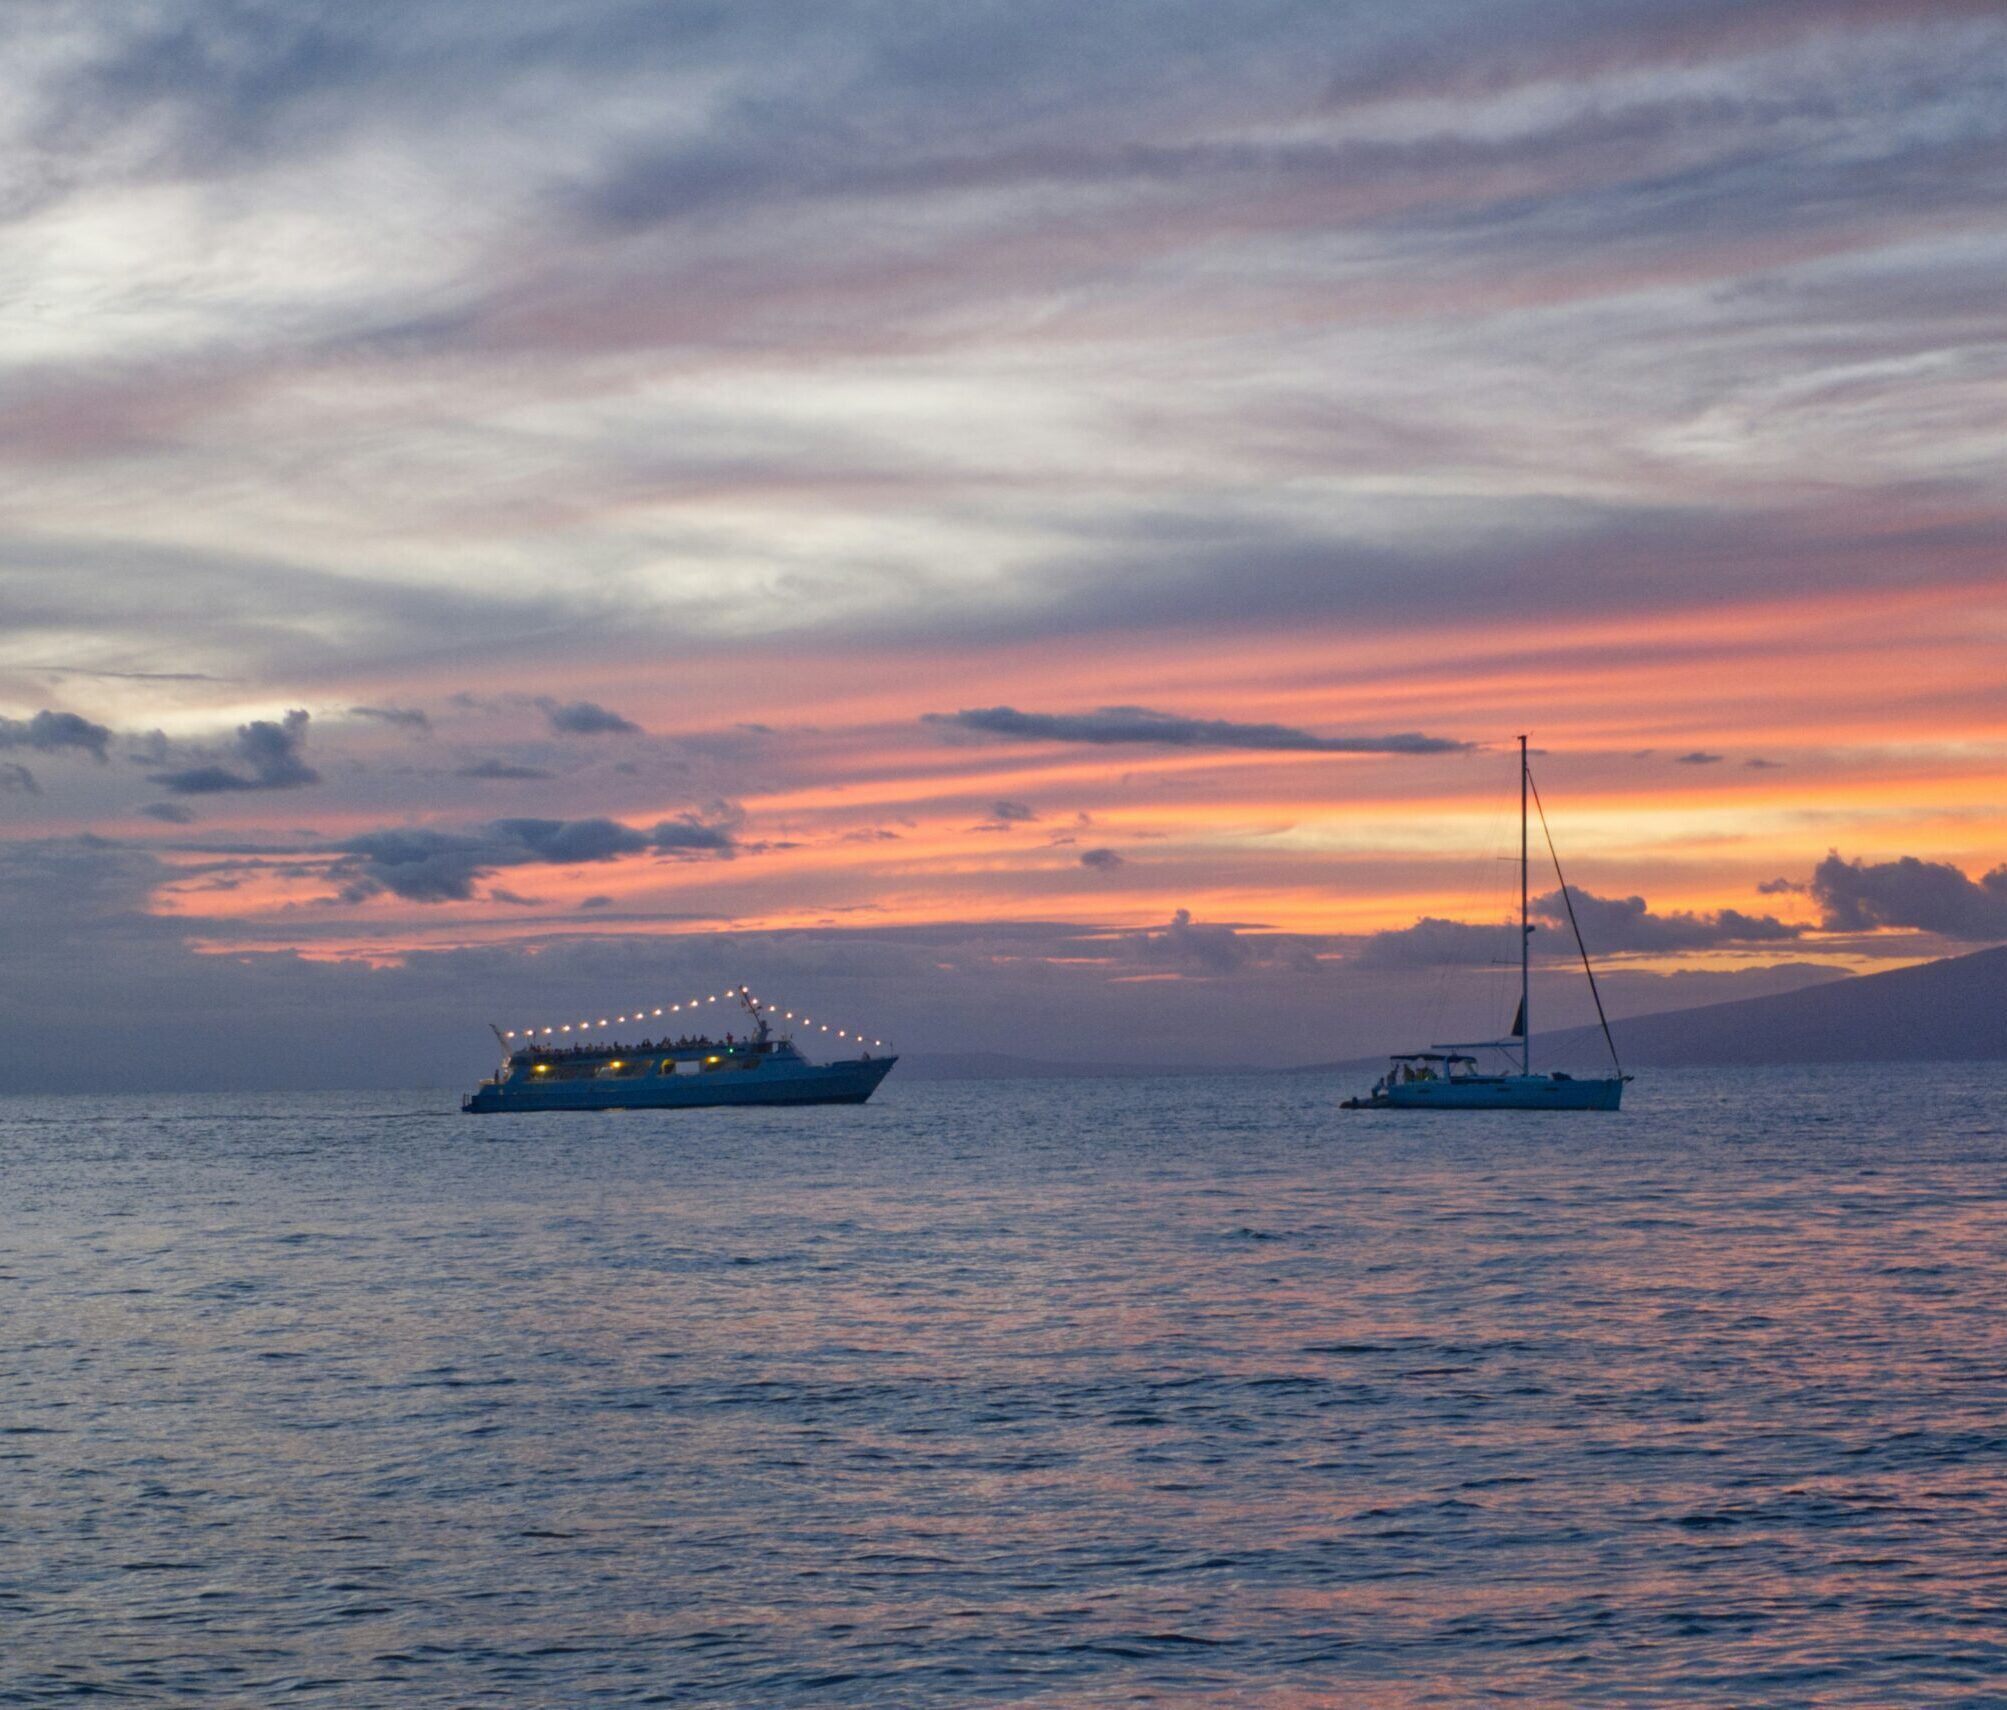 Sunset Cruise, Day trip to Capri Island